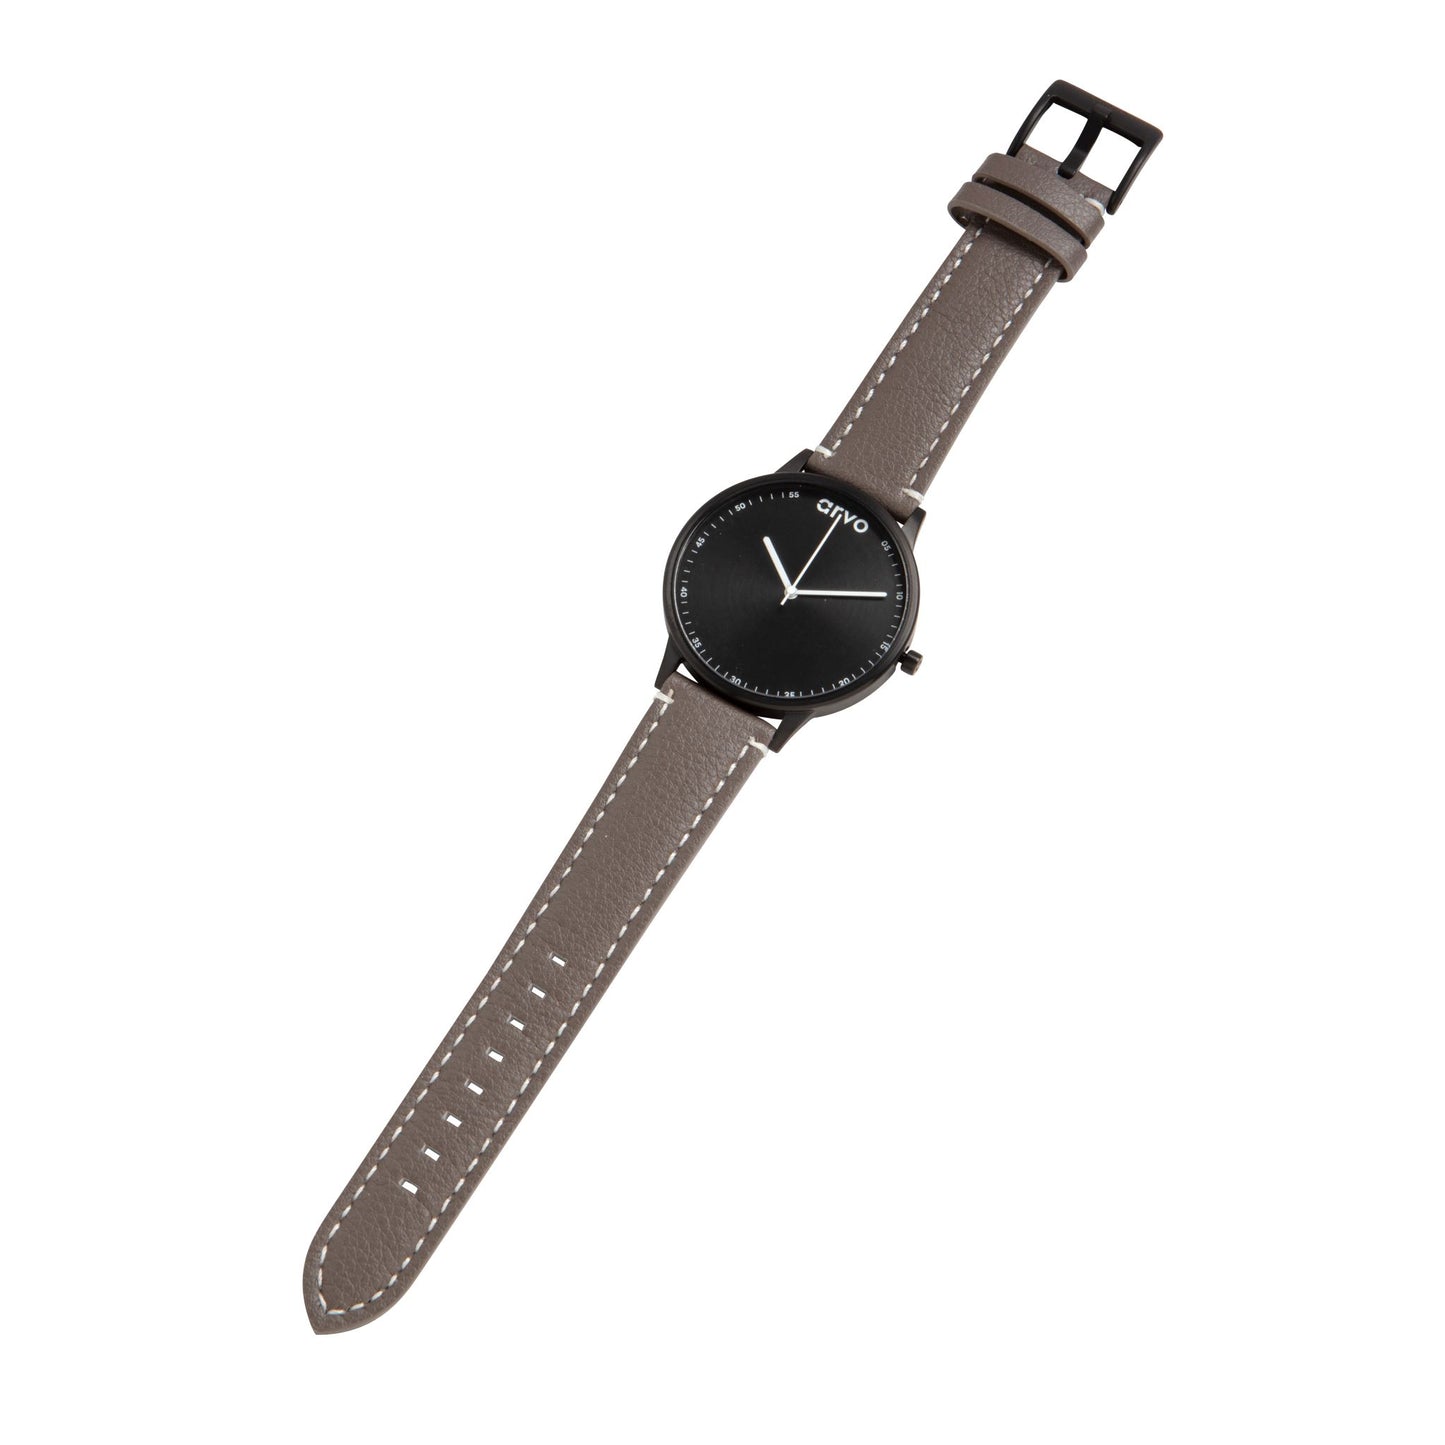 Arvo Time Traveler Watch - 43mm - Gray Leather